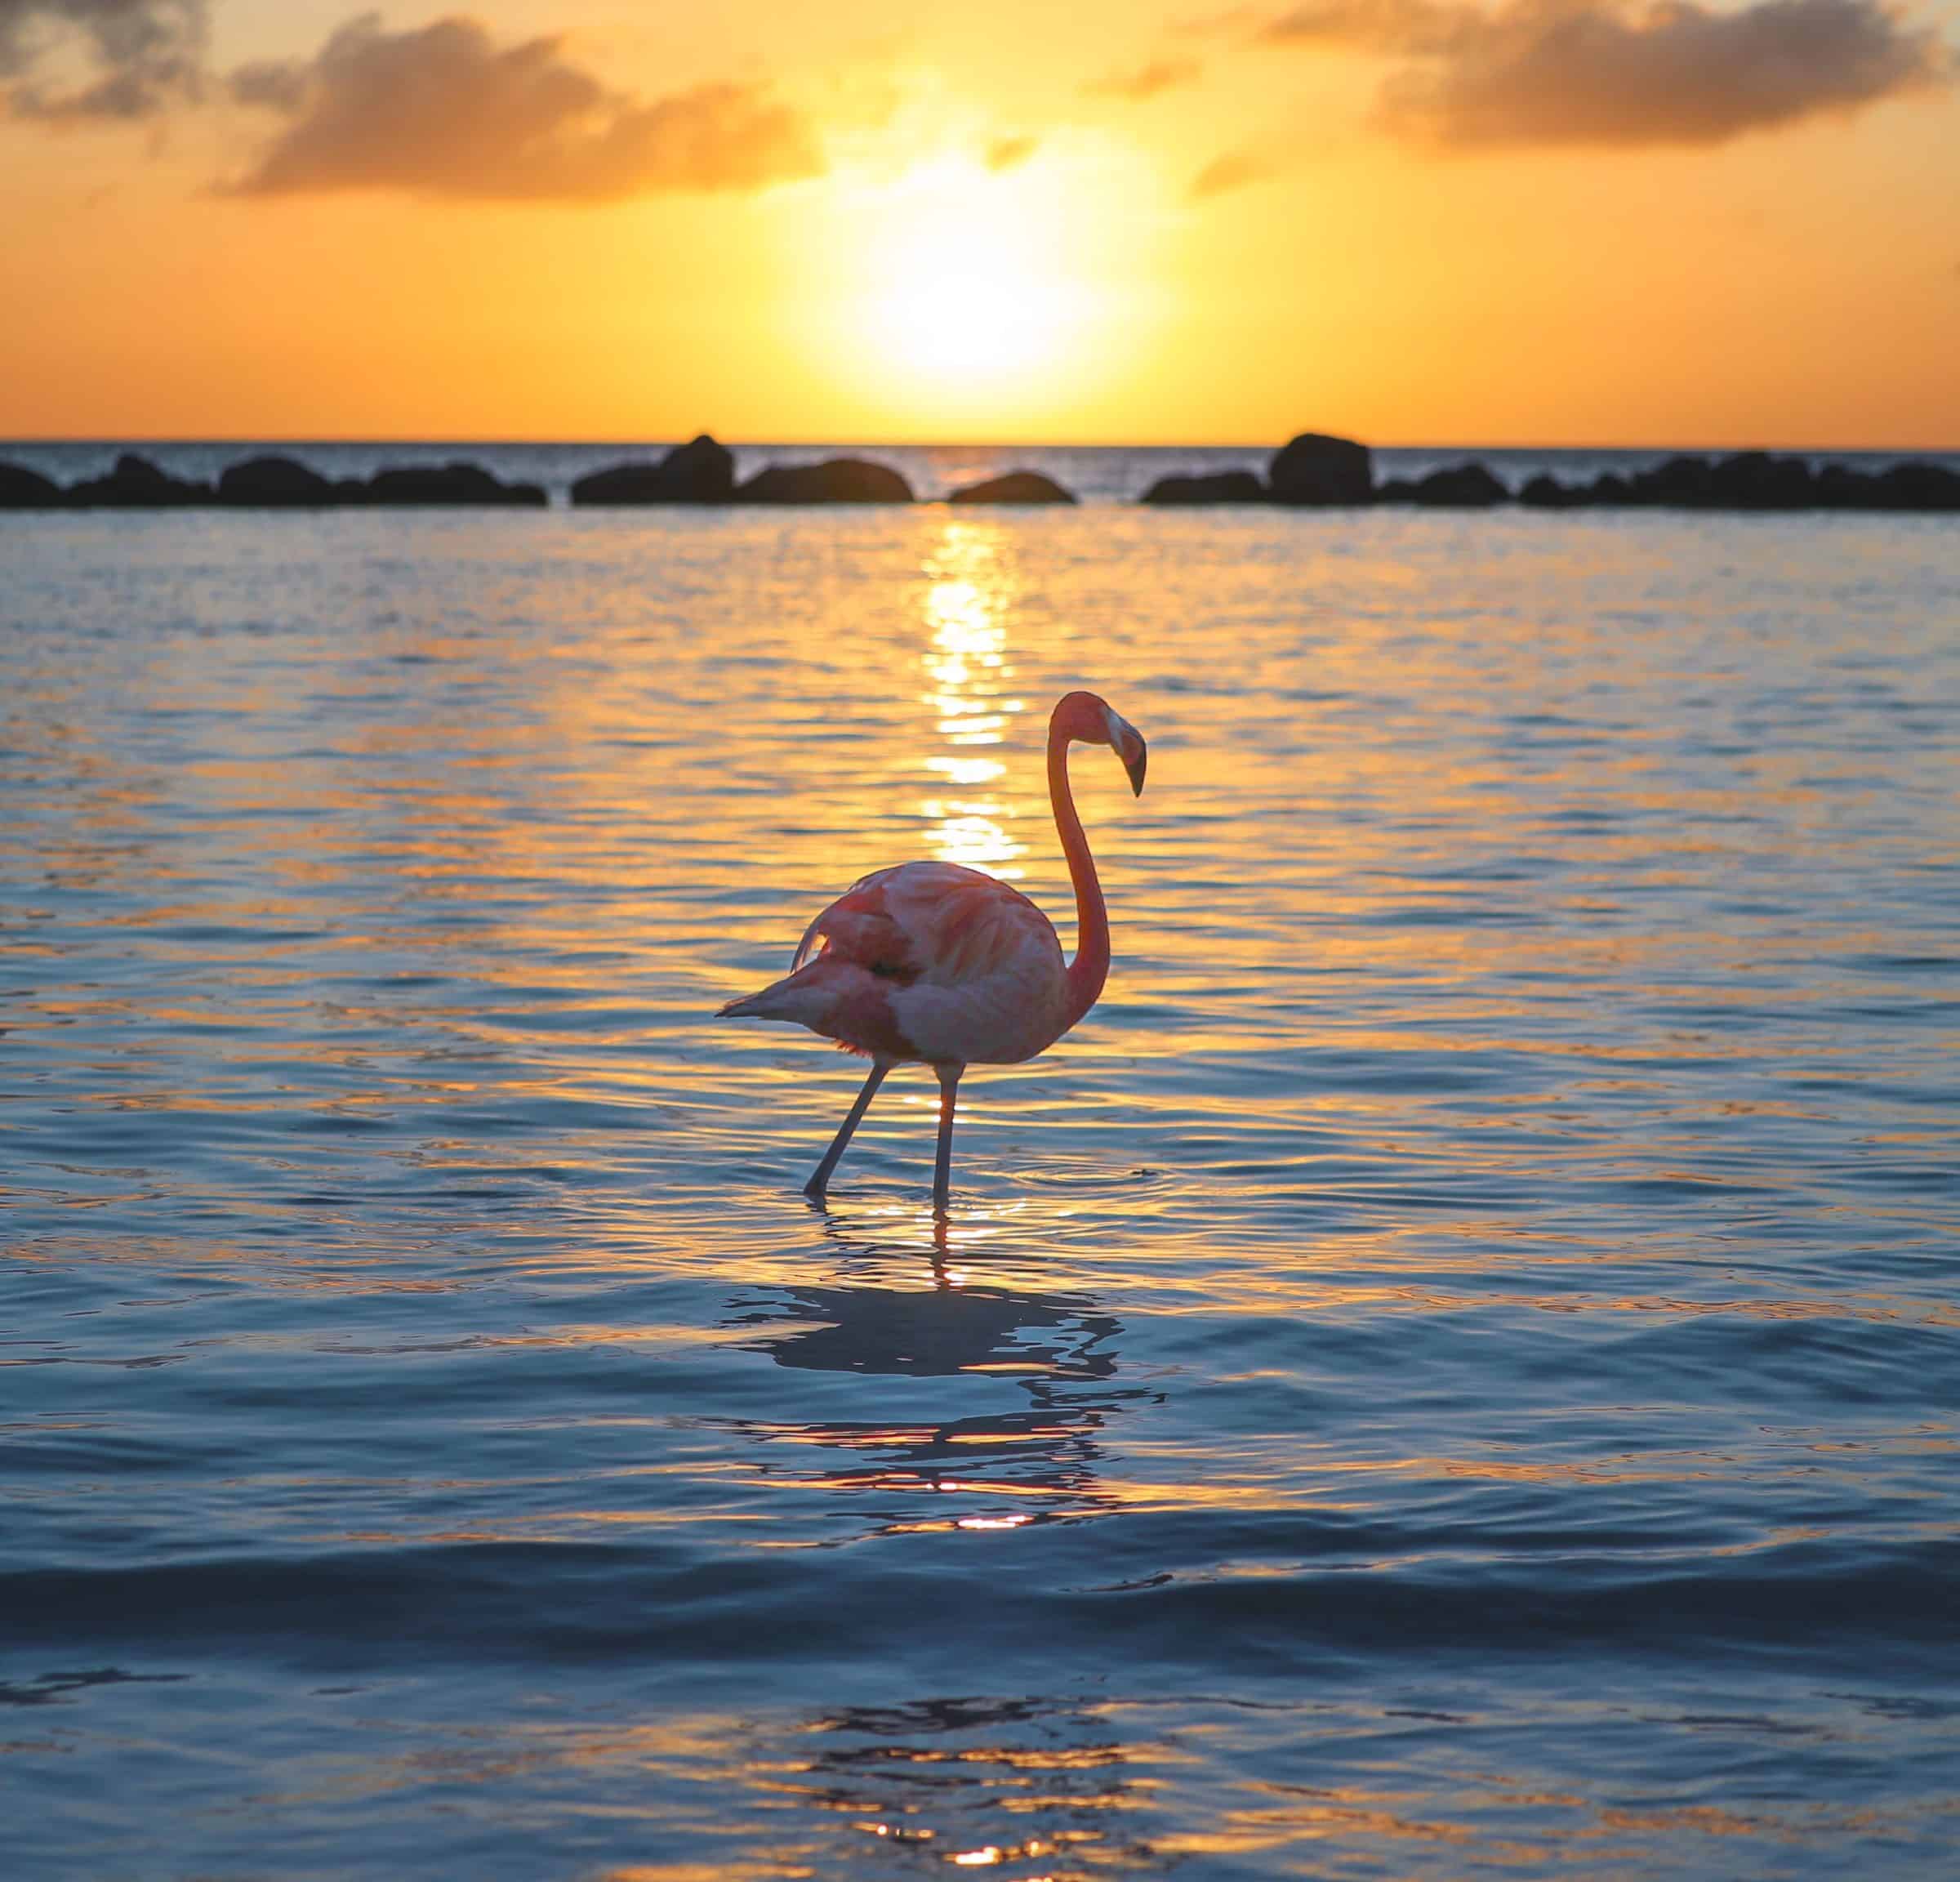 Renaissance ofwel flamingo eiland, Aruba